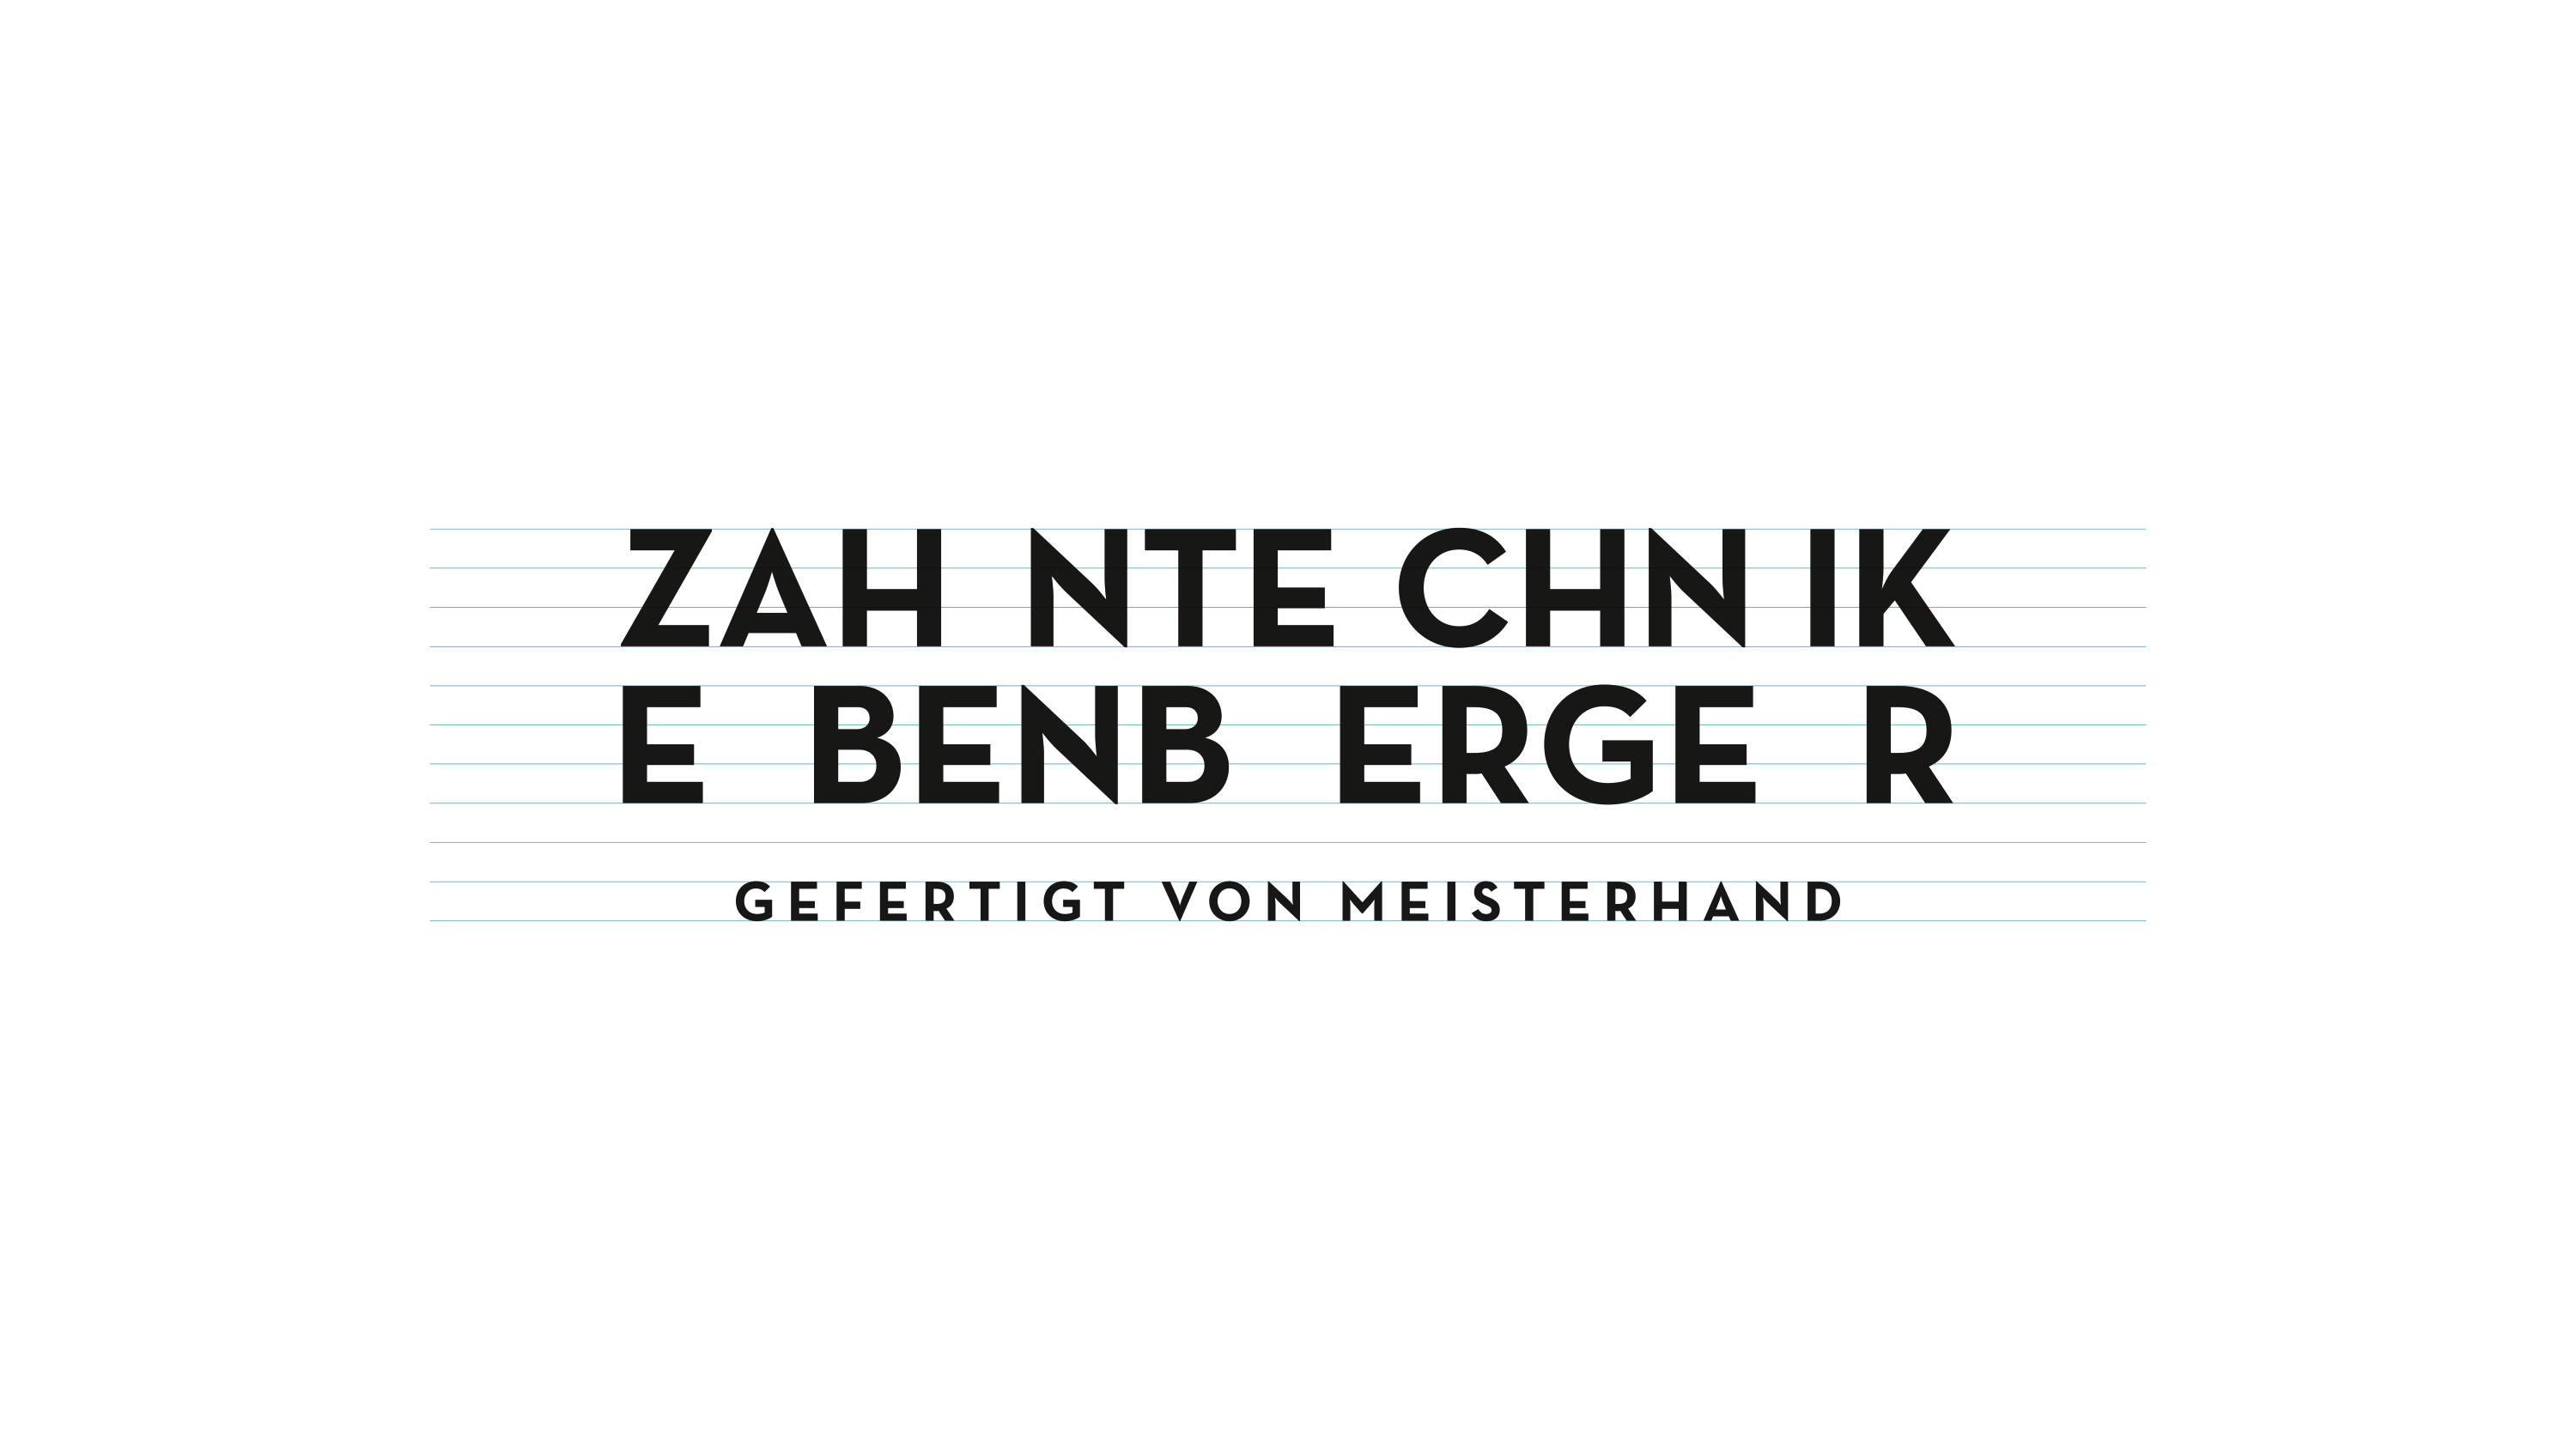 Zahntechnik Ebenberger Logo